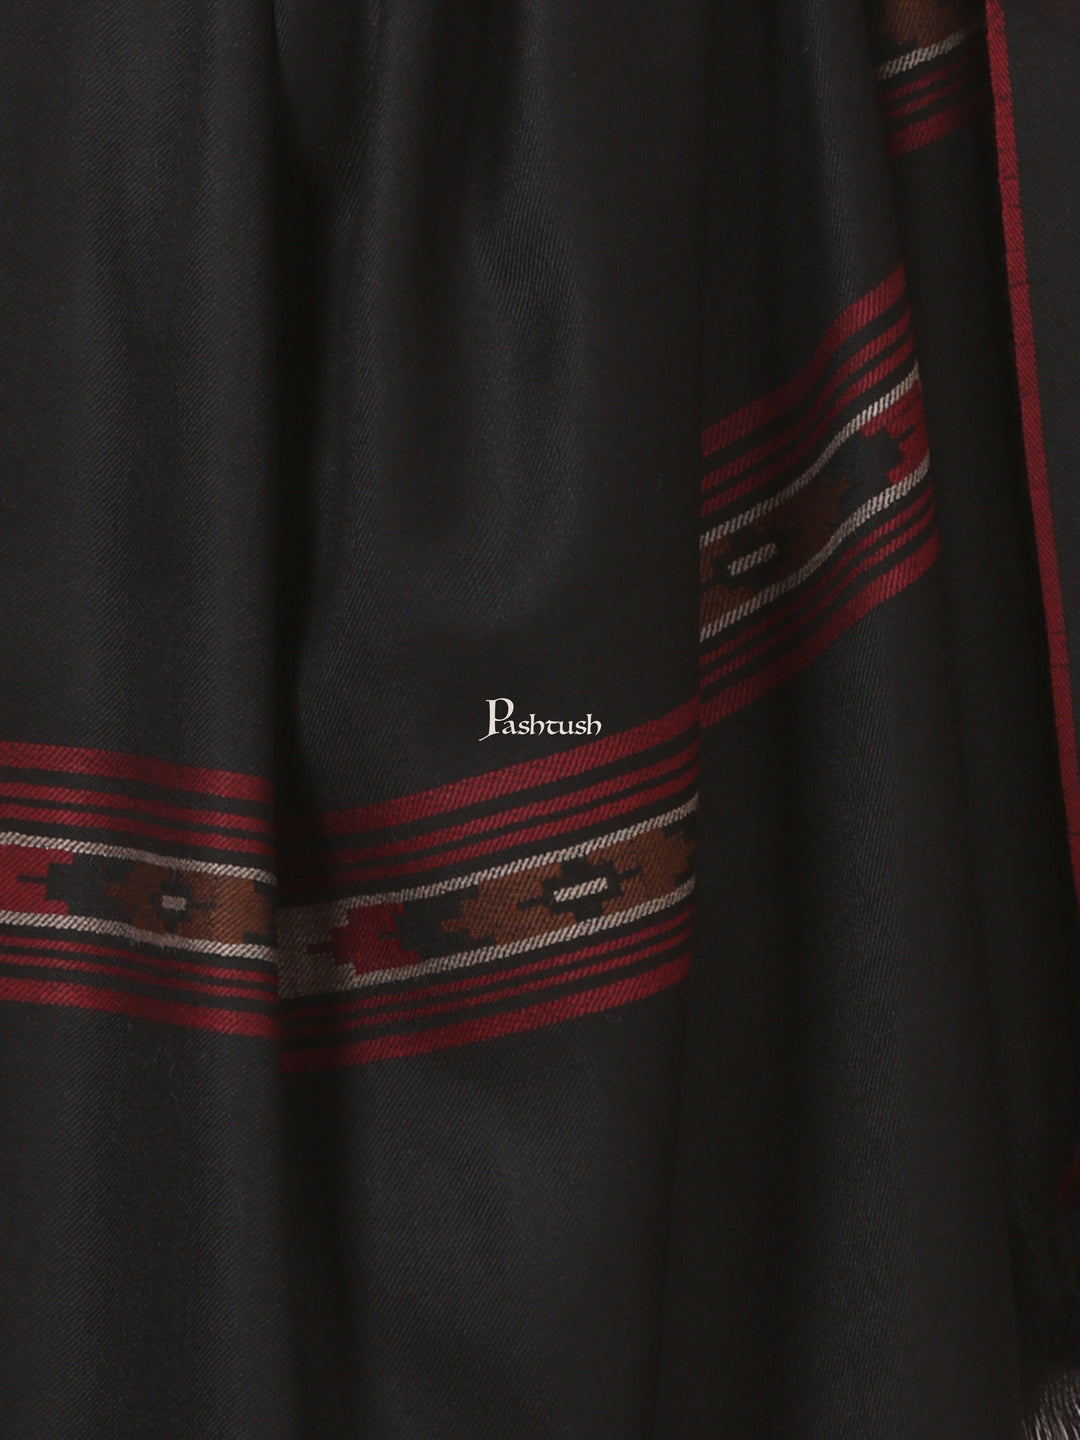 Pashtush India Mens Shawls Gents Shawl Pashtush Woven Aztec Design Mens Full Size Shawl In Extra Fine Wool -Black